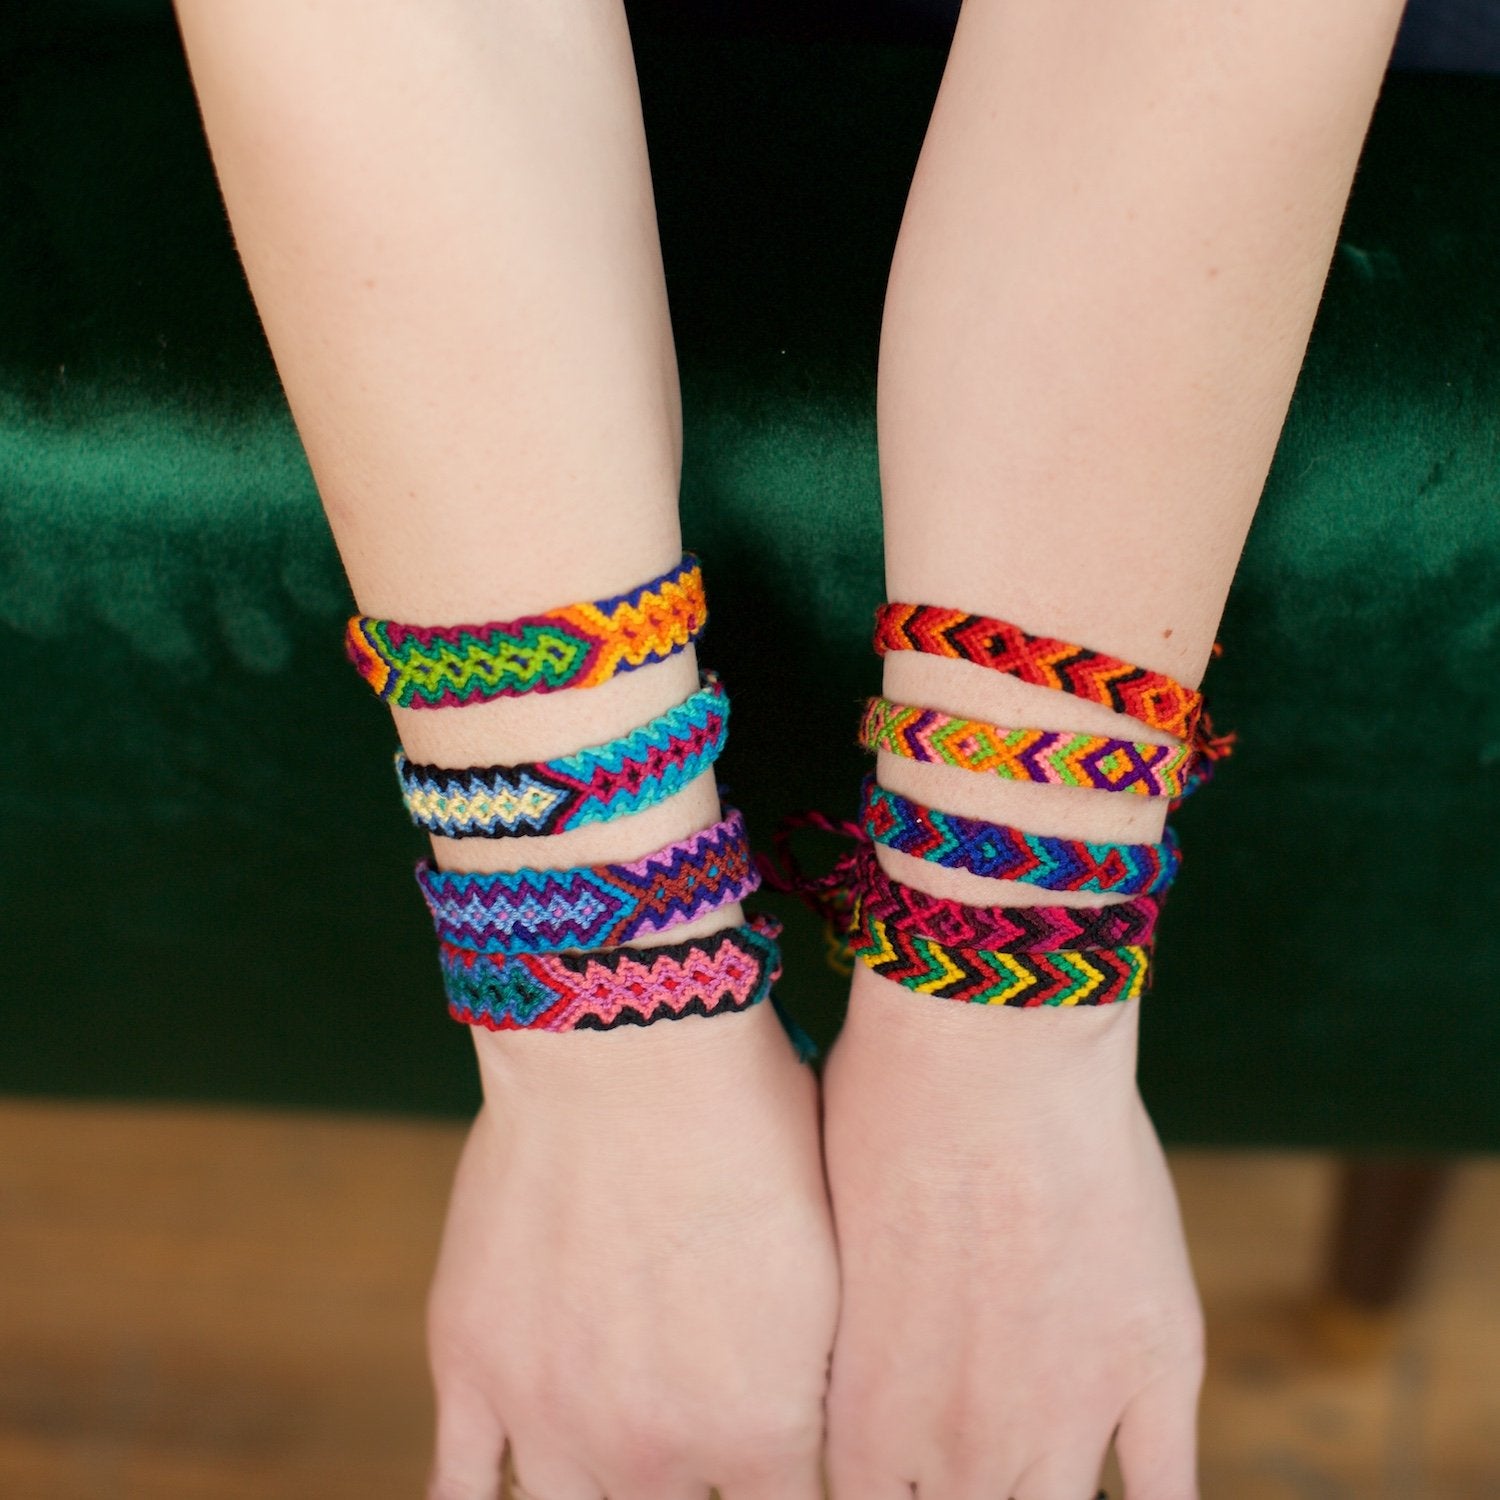 Lucia's World Emporium Fair Trade Handmade Guatemalan Woven Friendship Bracelet